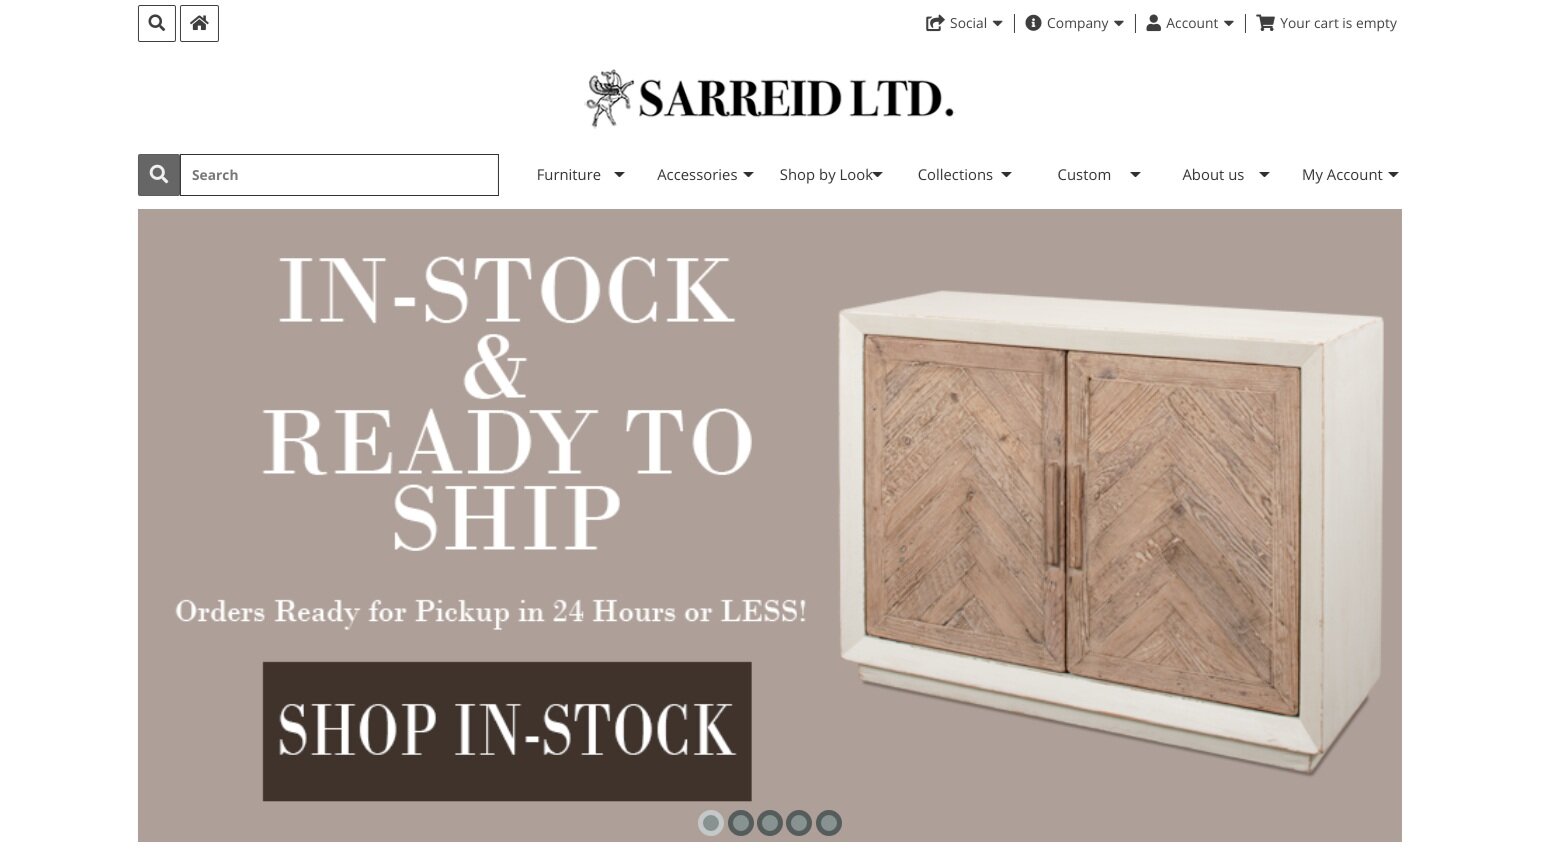 What’s in stock get’s prime positioning on Sarreid’s updated website